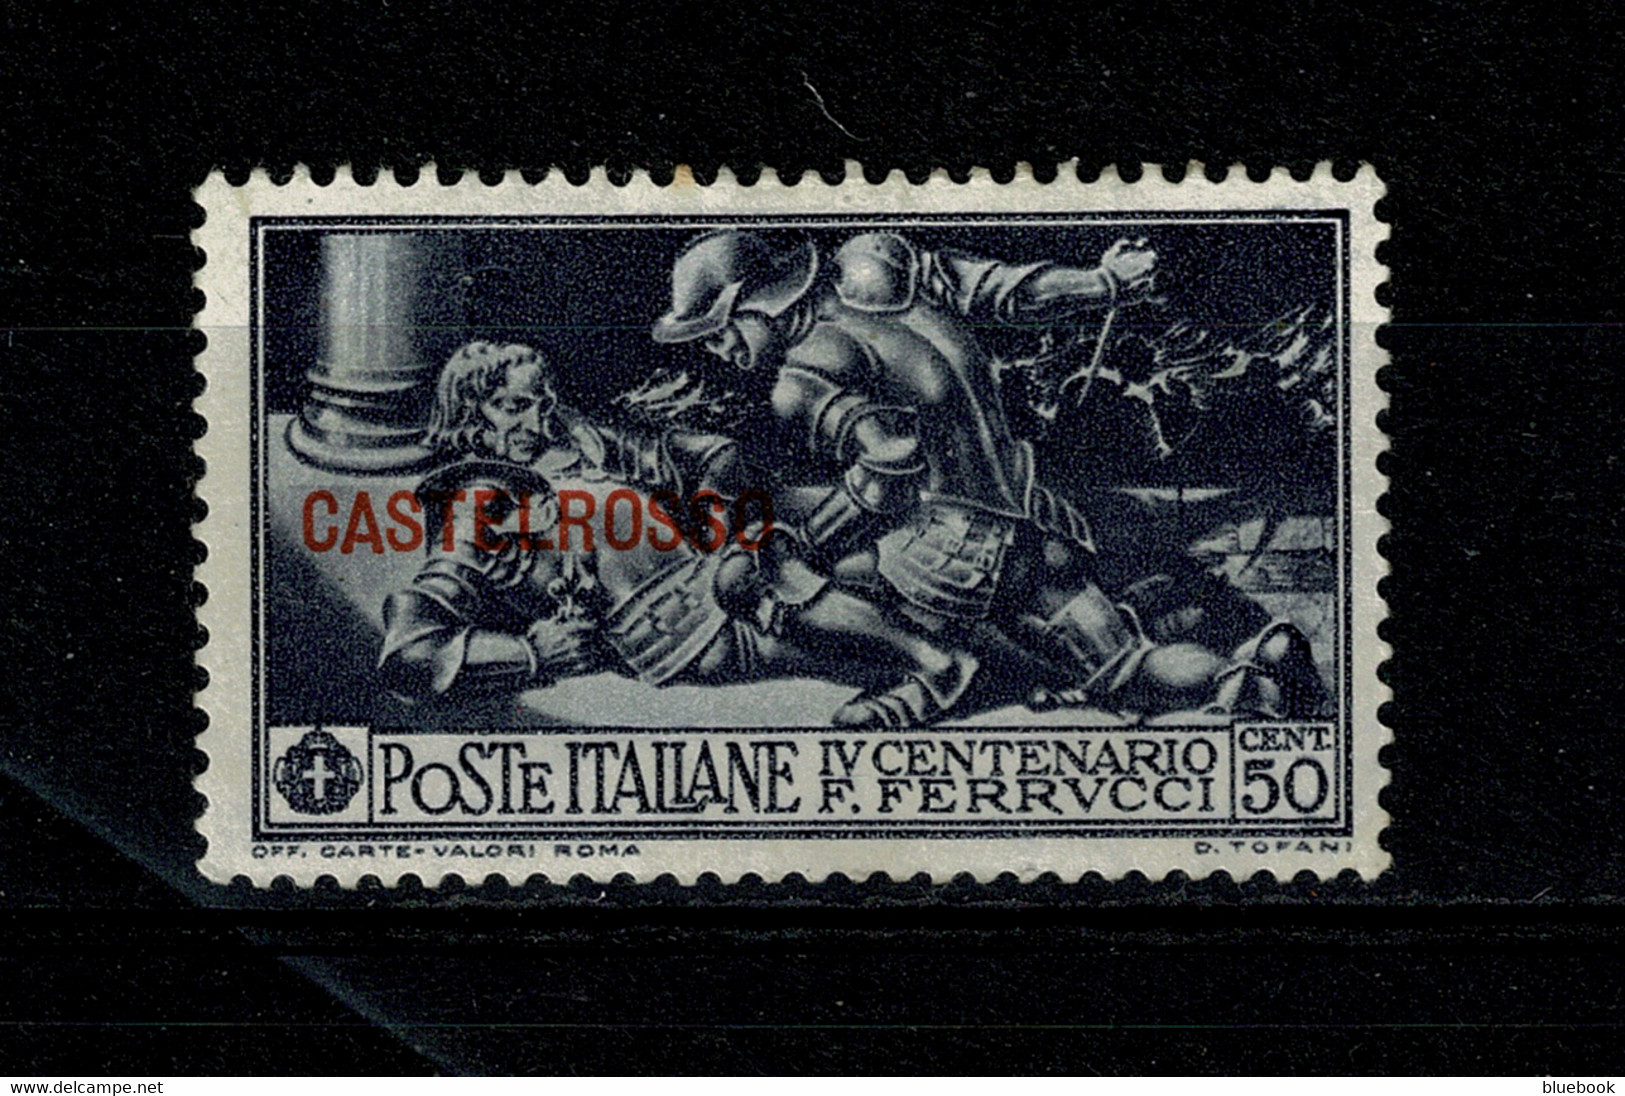 Ref 1400 - 1930 Italy Castelrosso  - Ferrucci 50c Mint Stamp - SG  27 - Cat £9.25 + - Castelrosso